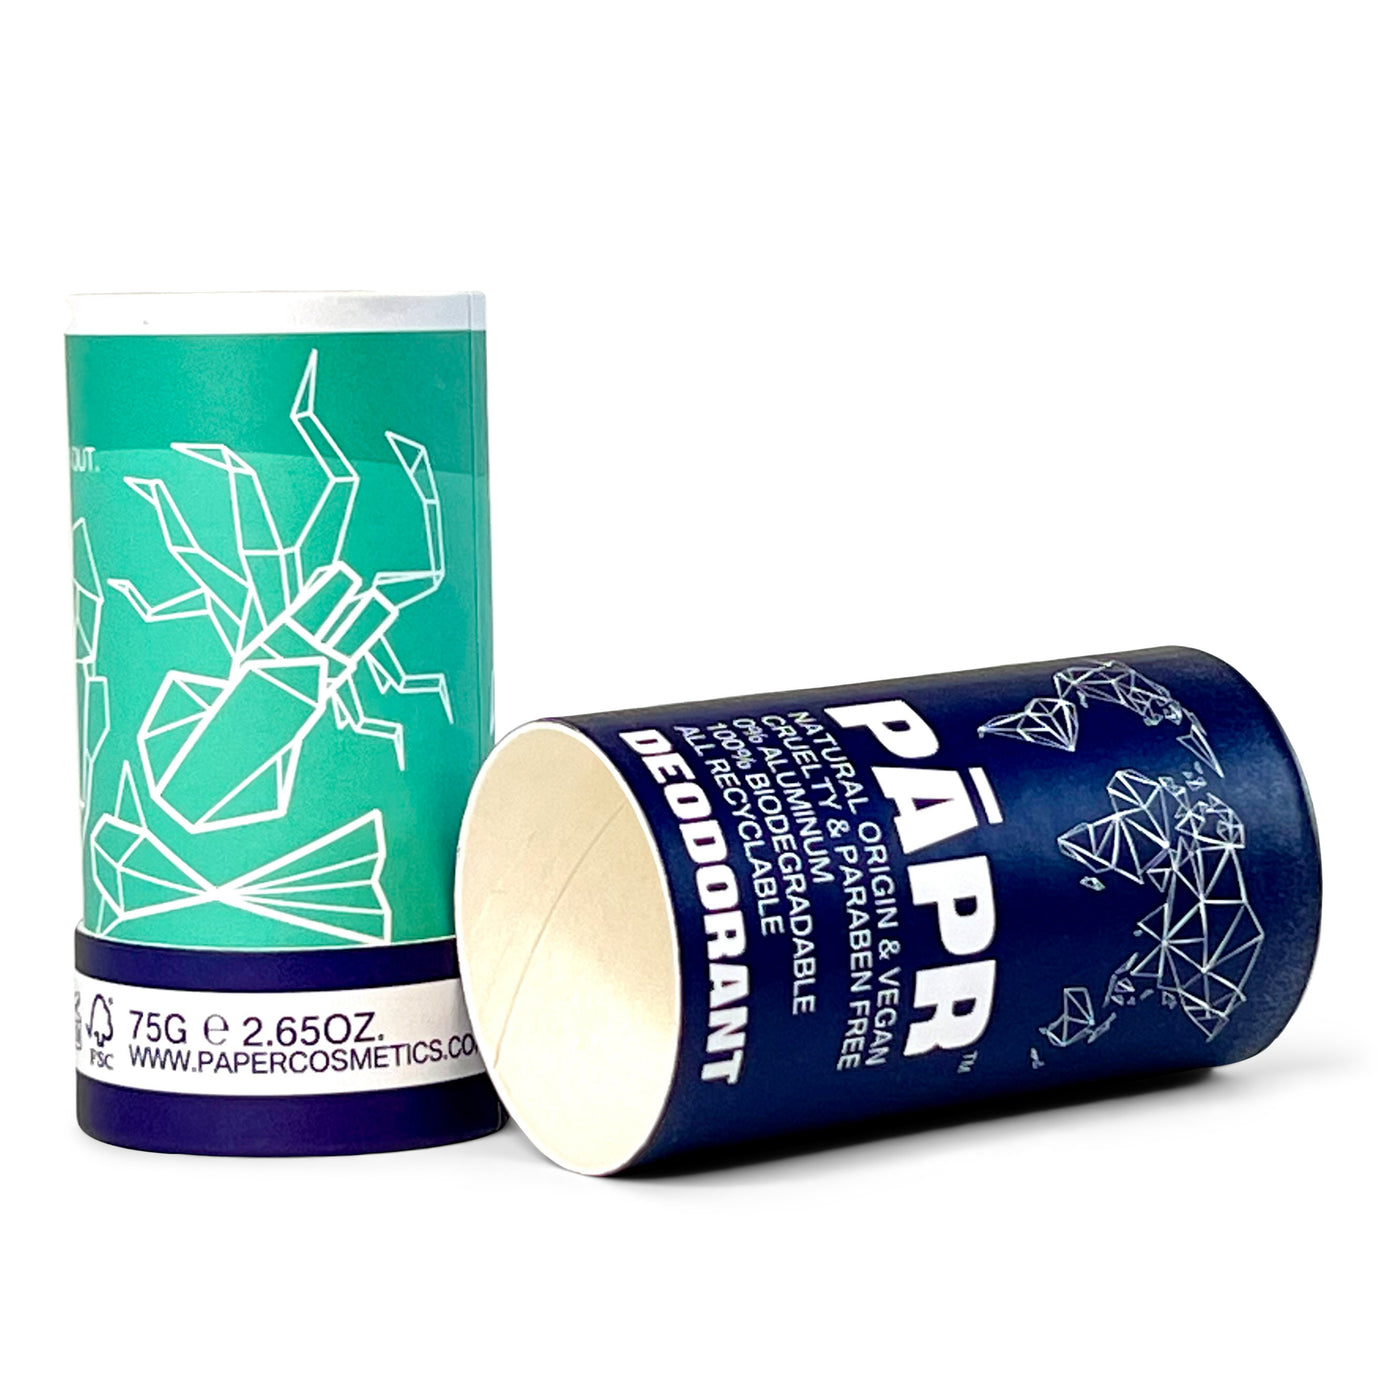 PAPR Deodorant: The Deep, Sea Grass & Plumeria, 2.65 oz.